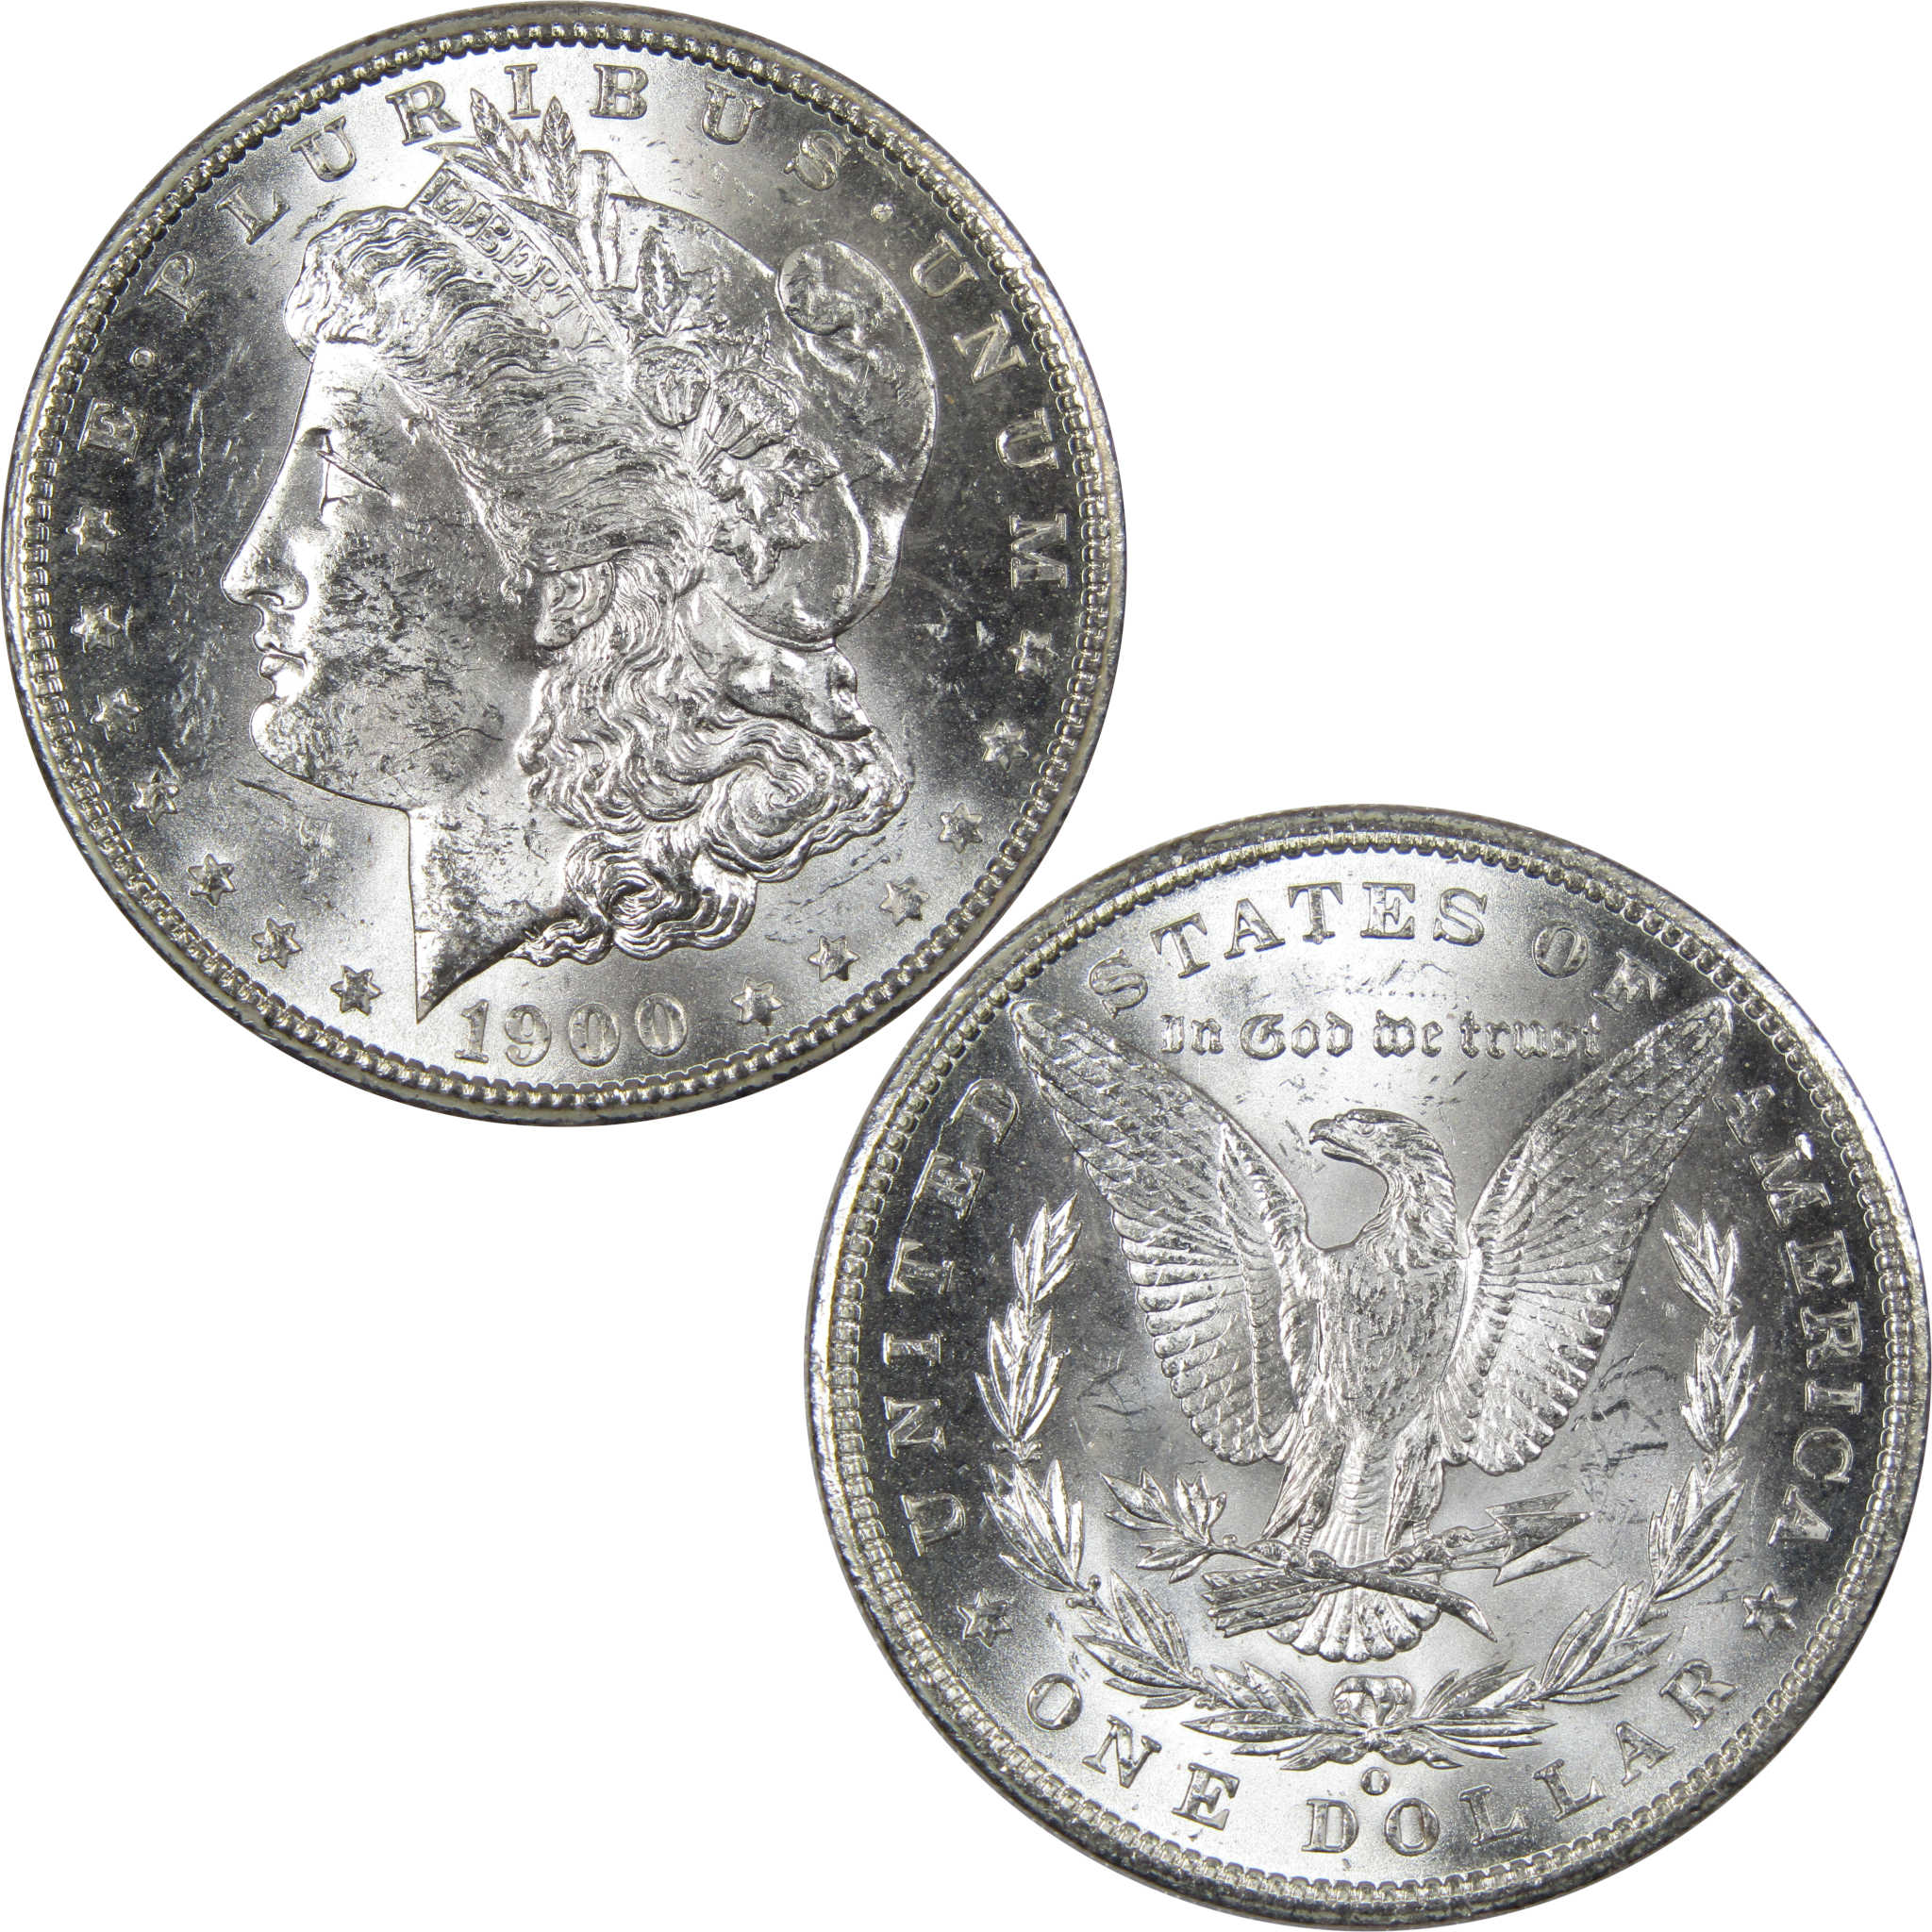 1900 O Morgan Dollar BU Uncirculated Mint State 90% Silver SKU:IPC9771 - Morgan coin - Morgan silver dollar - Morgan silver dollar for sale - Profile Coins &amp; Collectibles